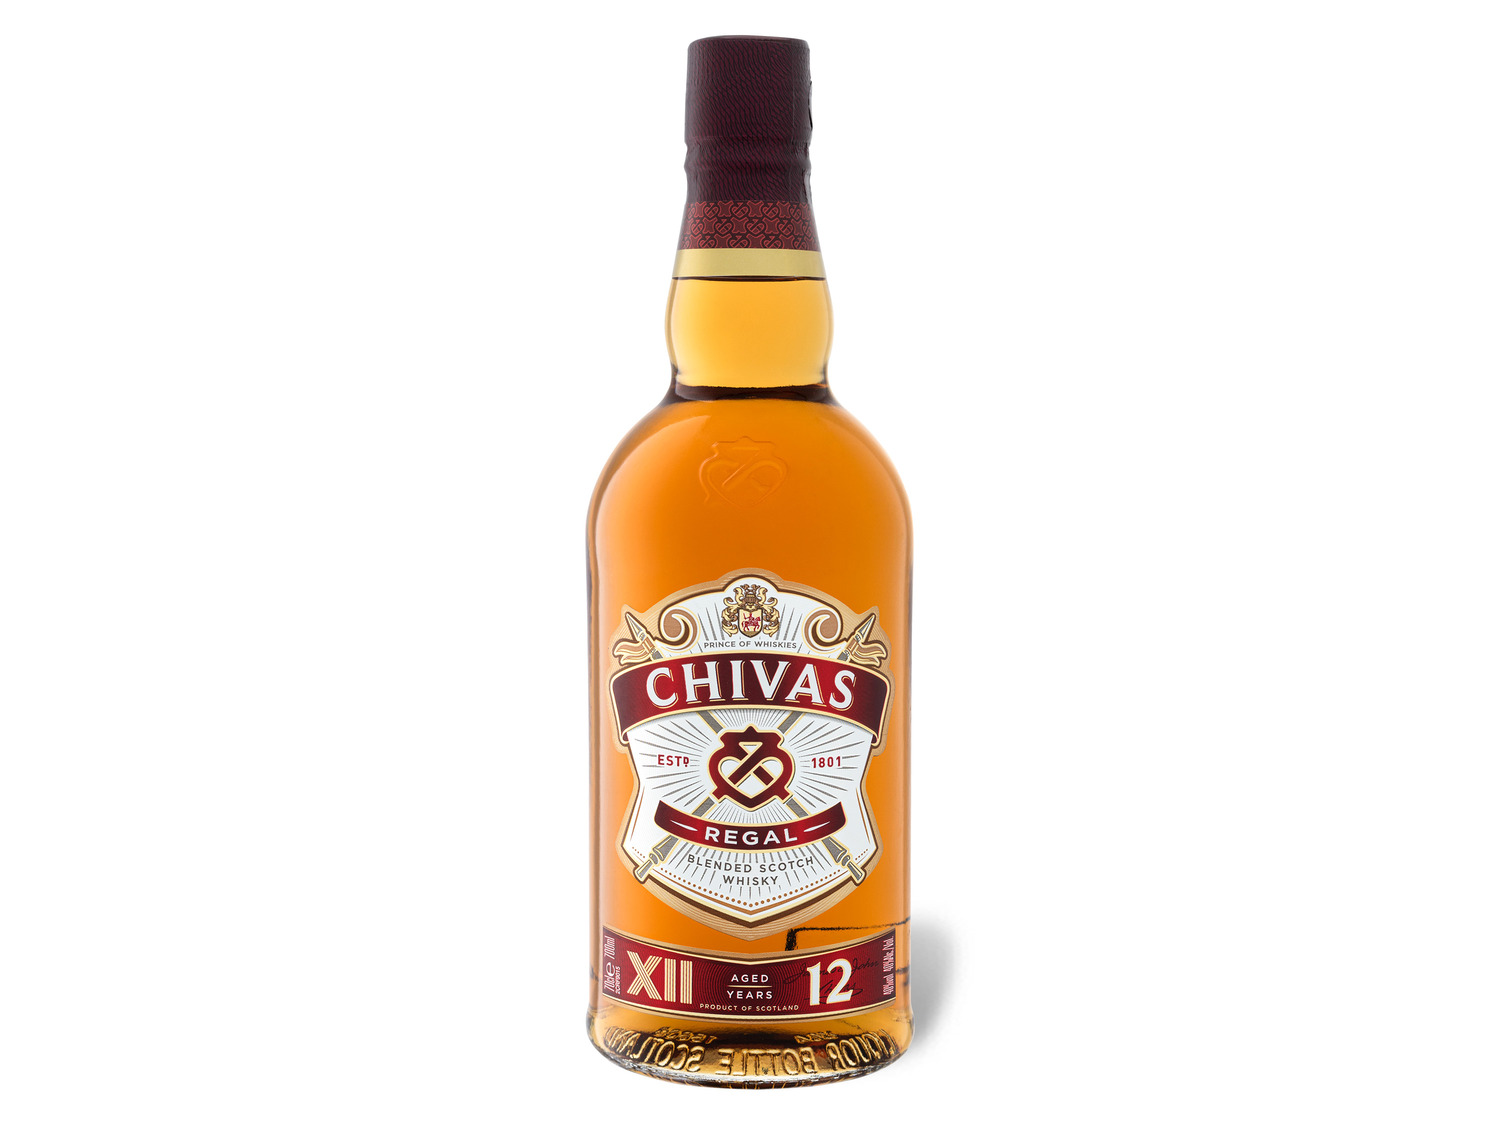 Vol Chivas Jahre Scotch Regal Whisky 40% 12 Blended